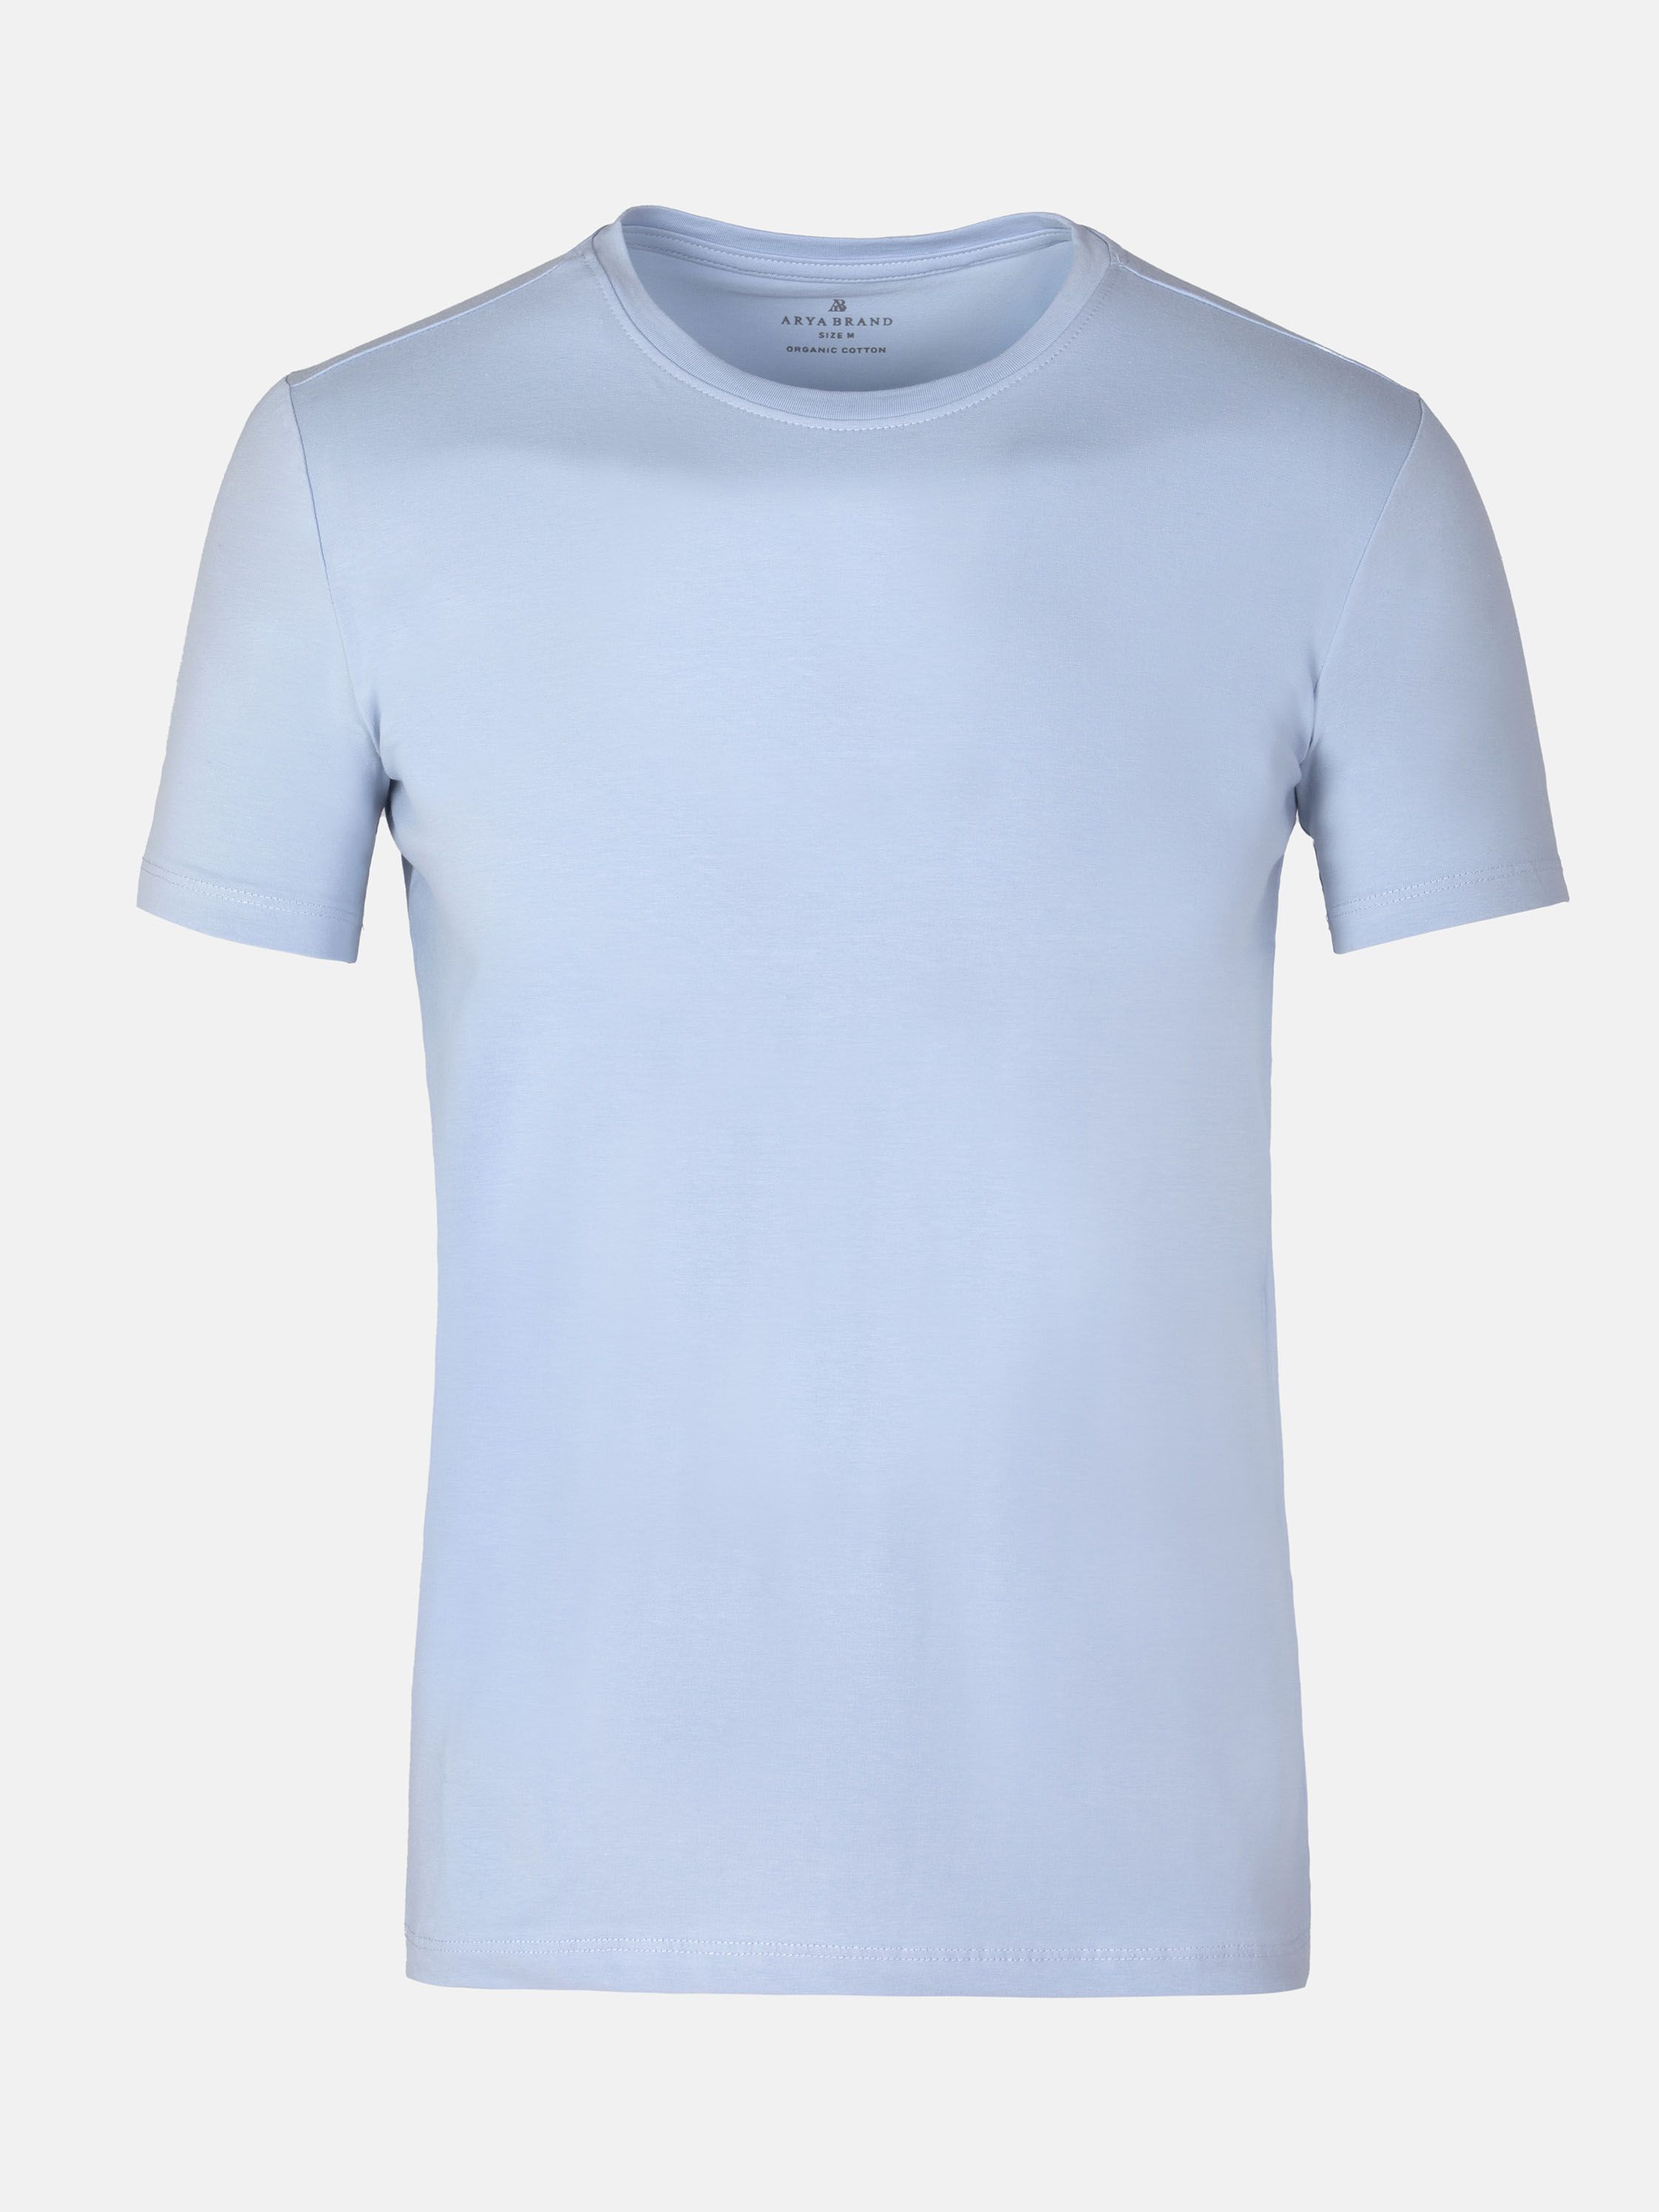 Sky Slim - Blue DENIM Fit |WAM Fit - Cut Blue Shirt Light Slim Slim Light Tee Blue T-Shirt